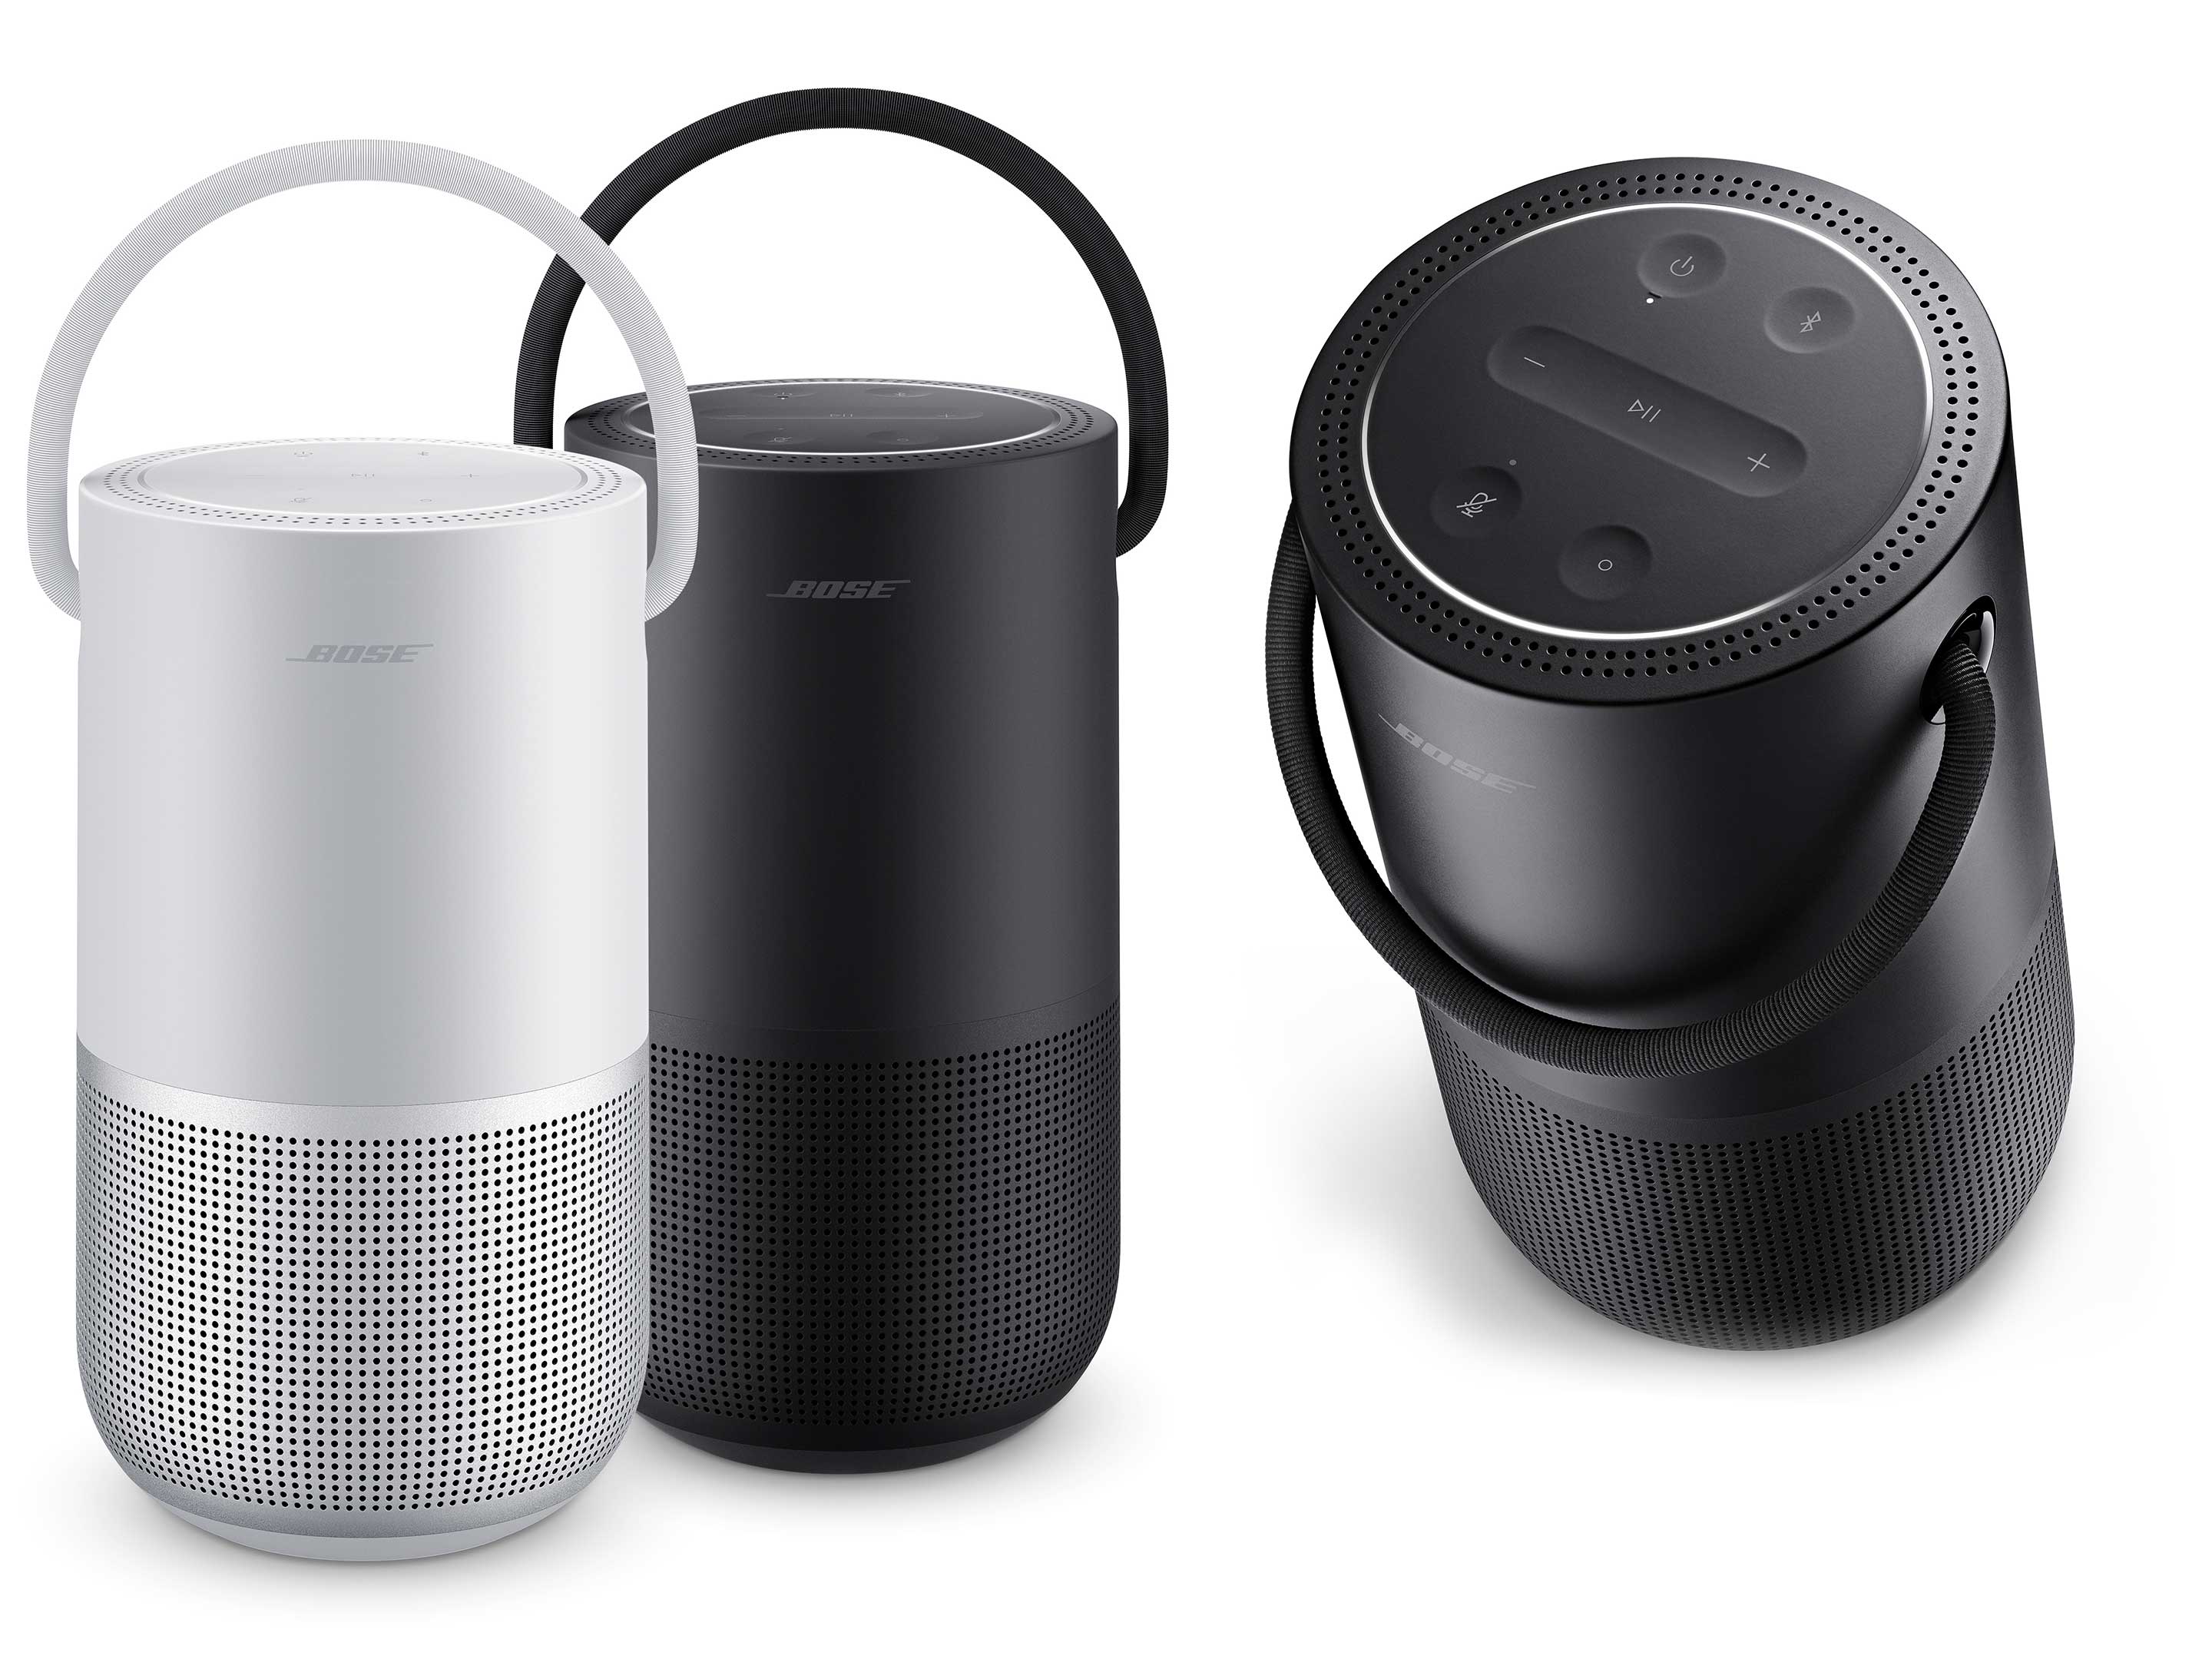 Bose's new portable Bluetooth speaker 